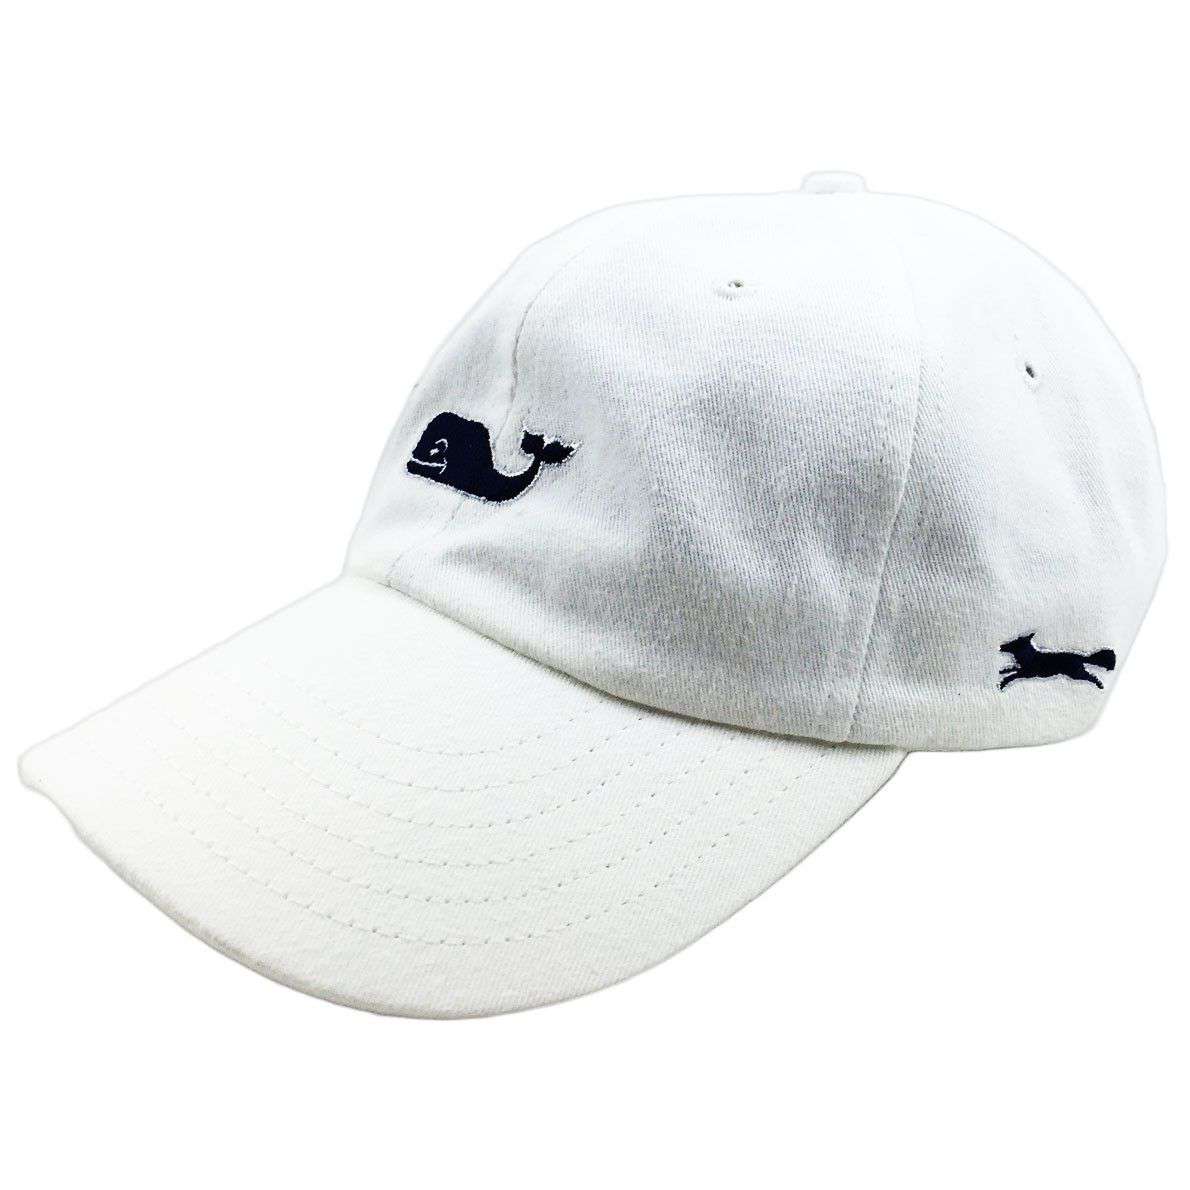 Whale Logo Baseball Hat in White w/ Navy Longshanks by Vineyard Vines - Country Club Prep